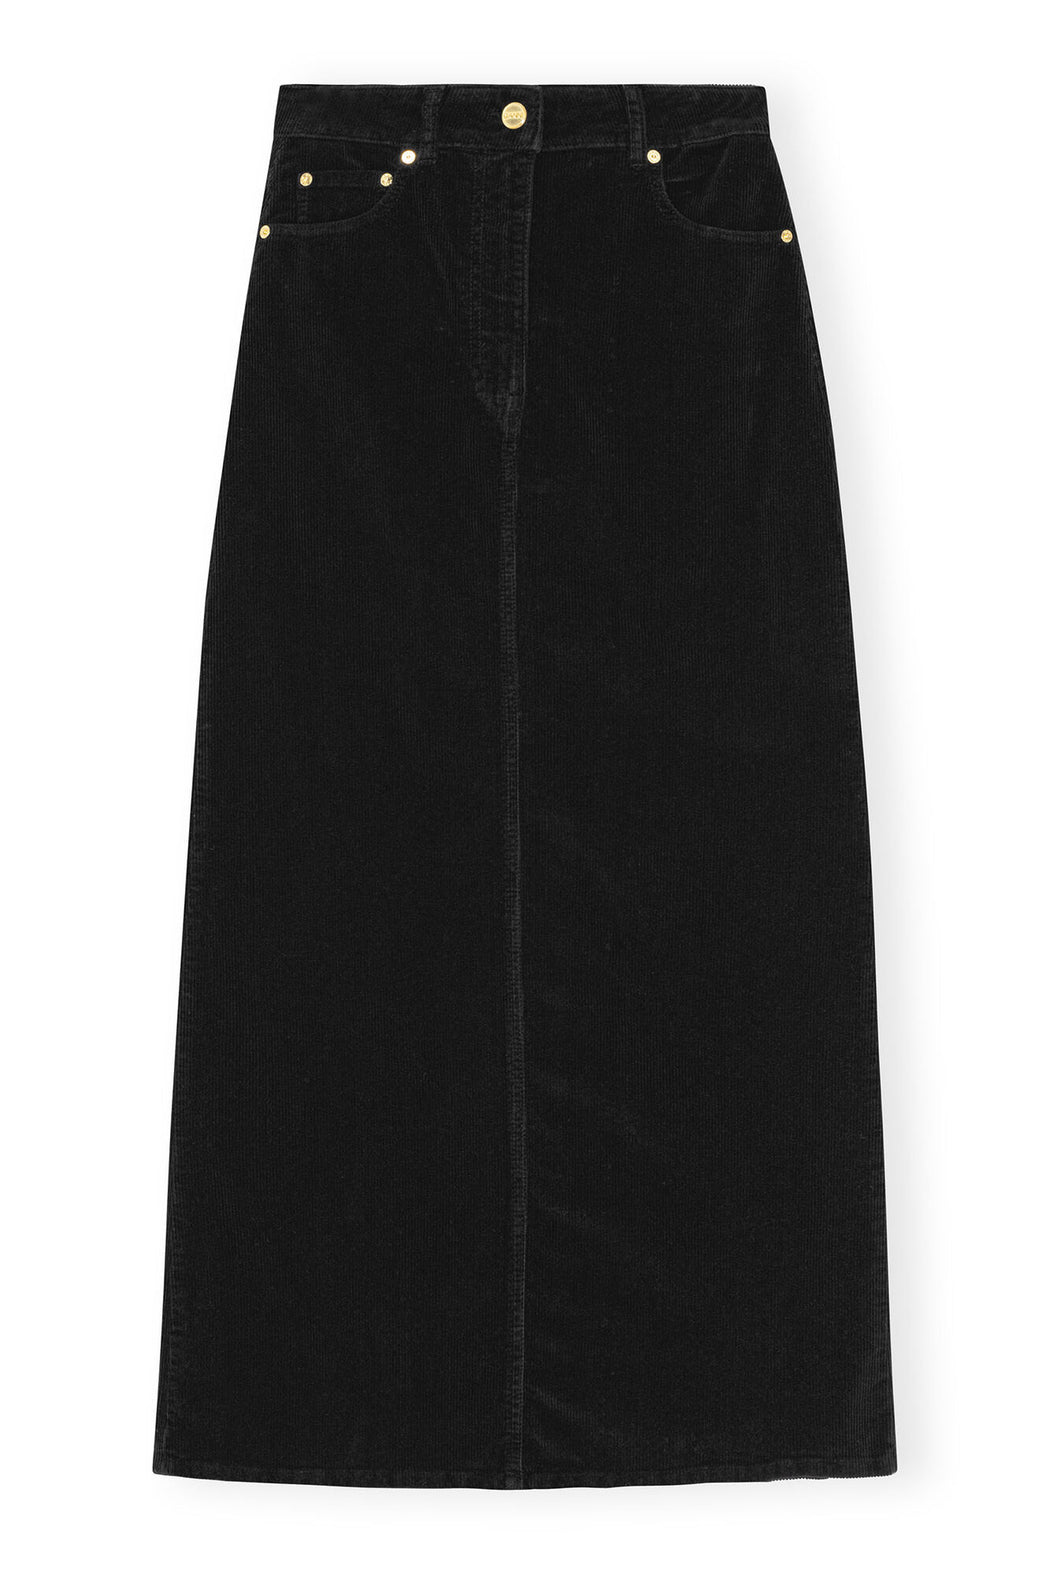 Ganni - Washed Corduroy Long Skirt in Black